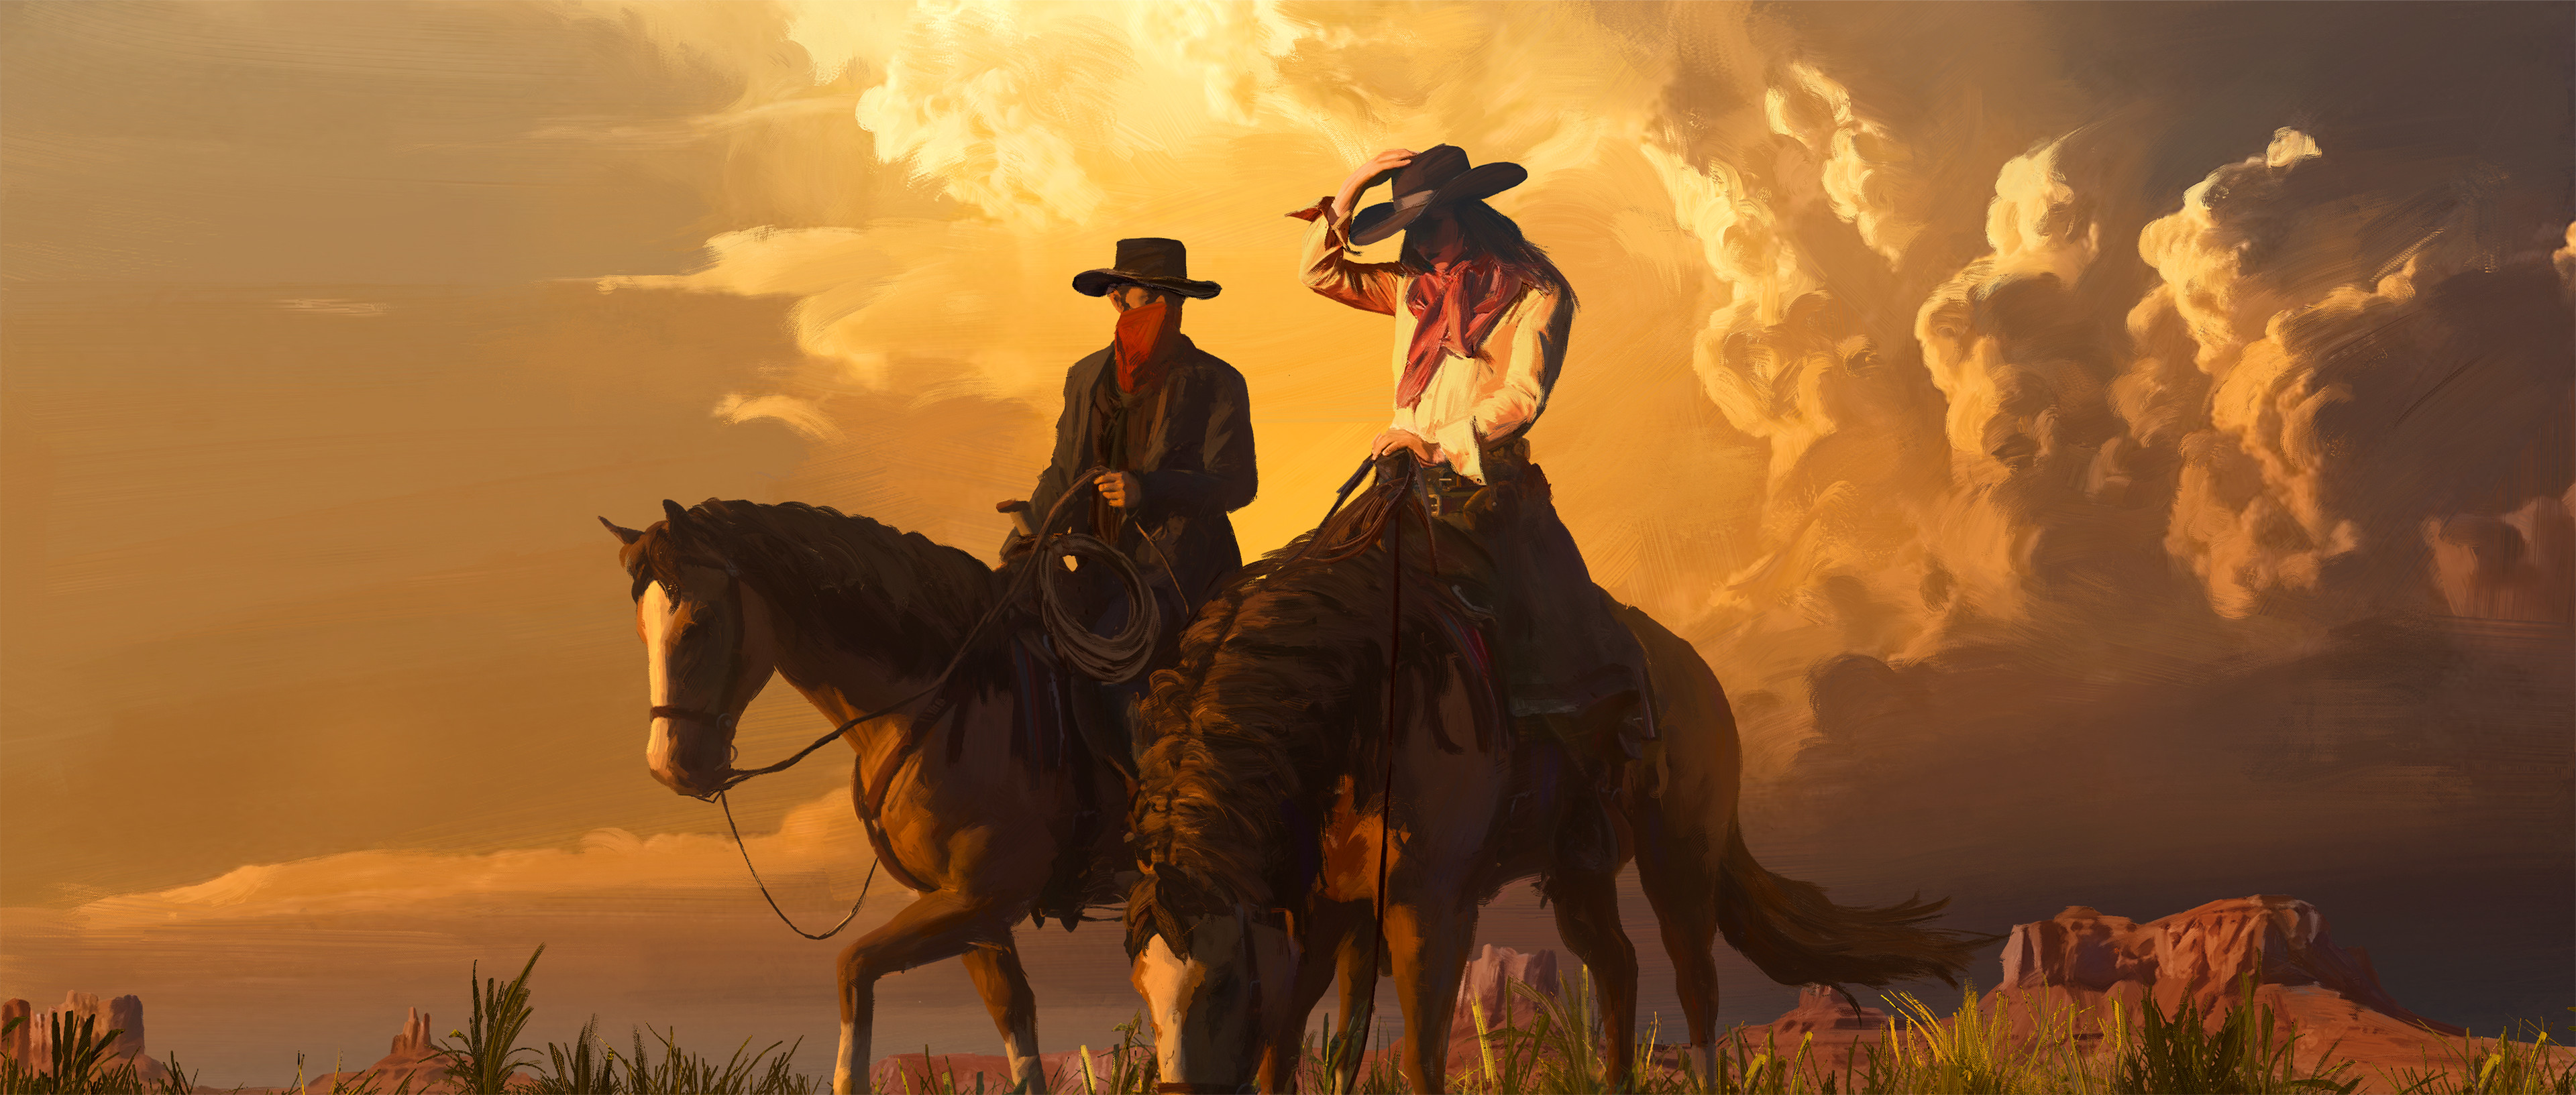 Yongfei Liu Digital 2D Digital Art Artwork Illustration Western Cowboys Horse Oil Painting Clouds Co 3840x1633